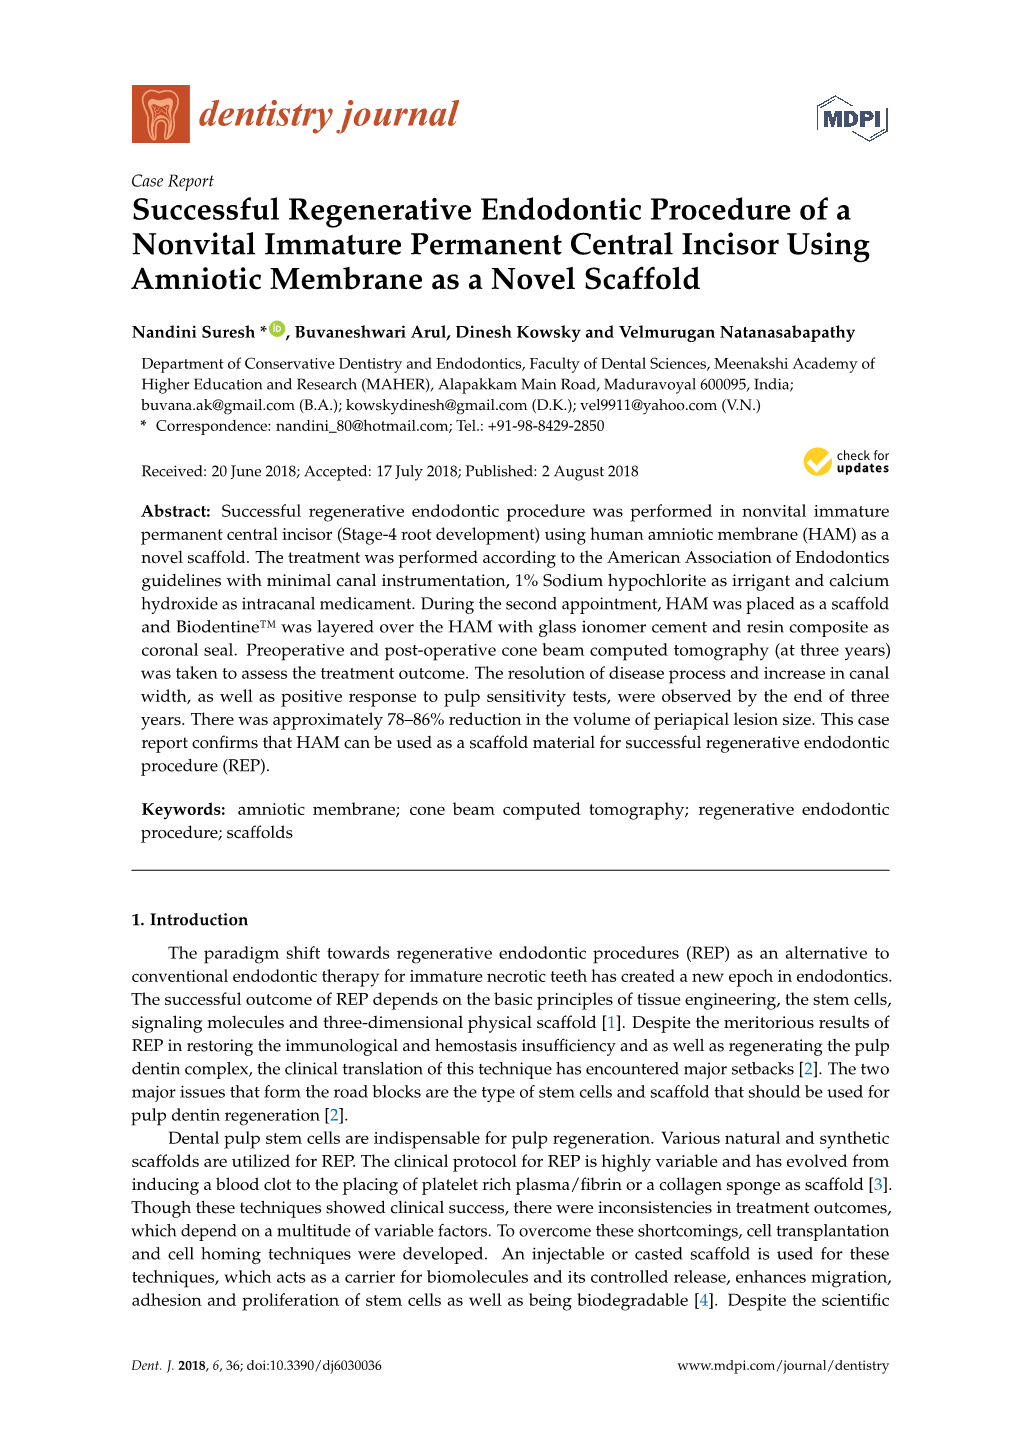 Successful Regenerative Endodontic Procedure of a Nonvital Immature Permanent Central Incisor Using Amniotic Membrane As a Novel Scaffold